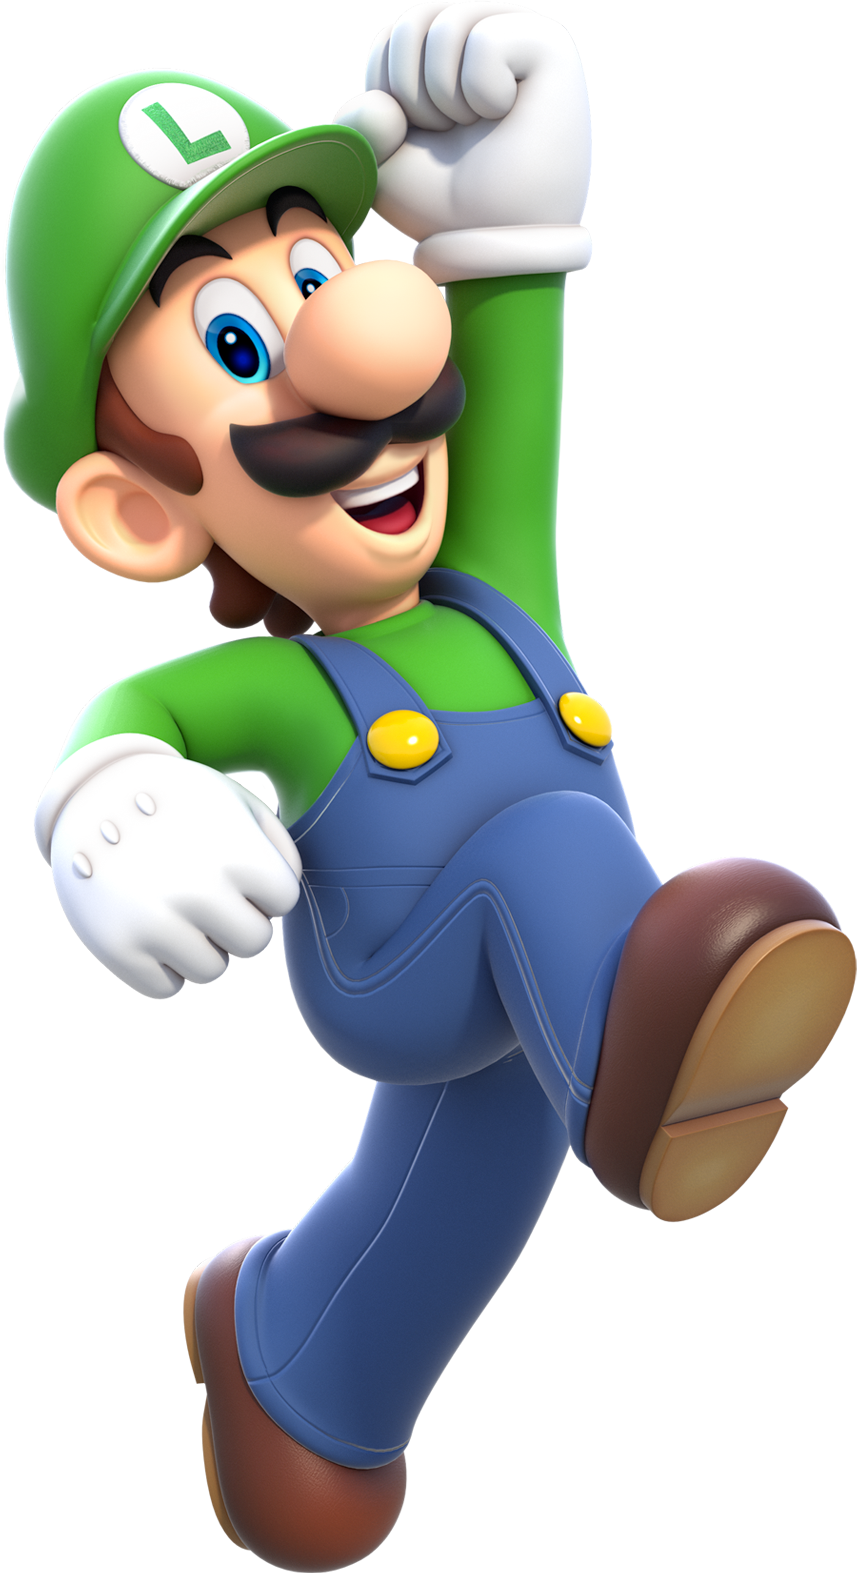 Download Toy Superstar Saga Character Fictional Mario Luigi HQ PNG Image Fr...